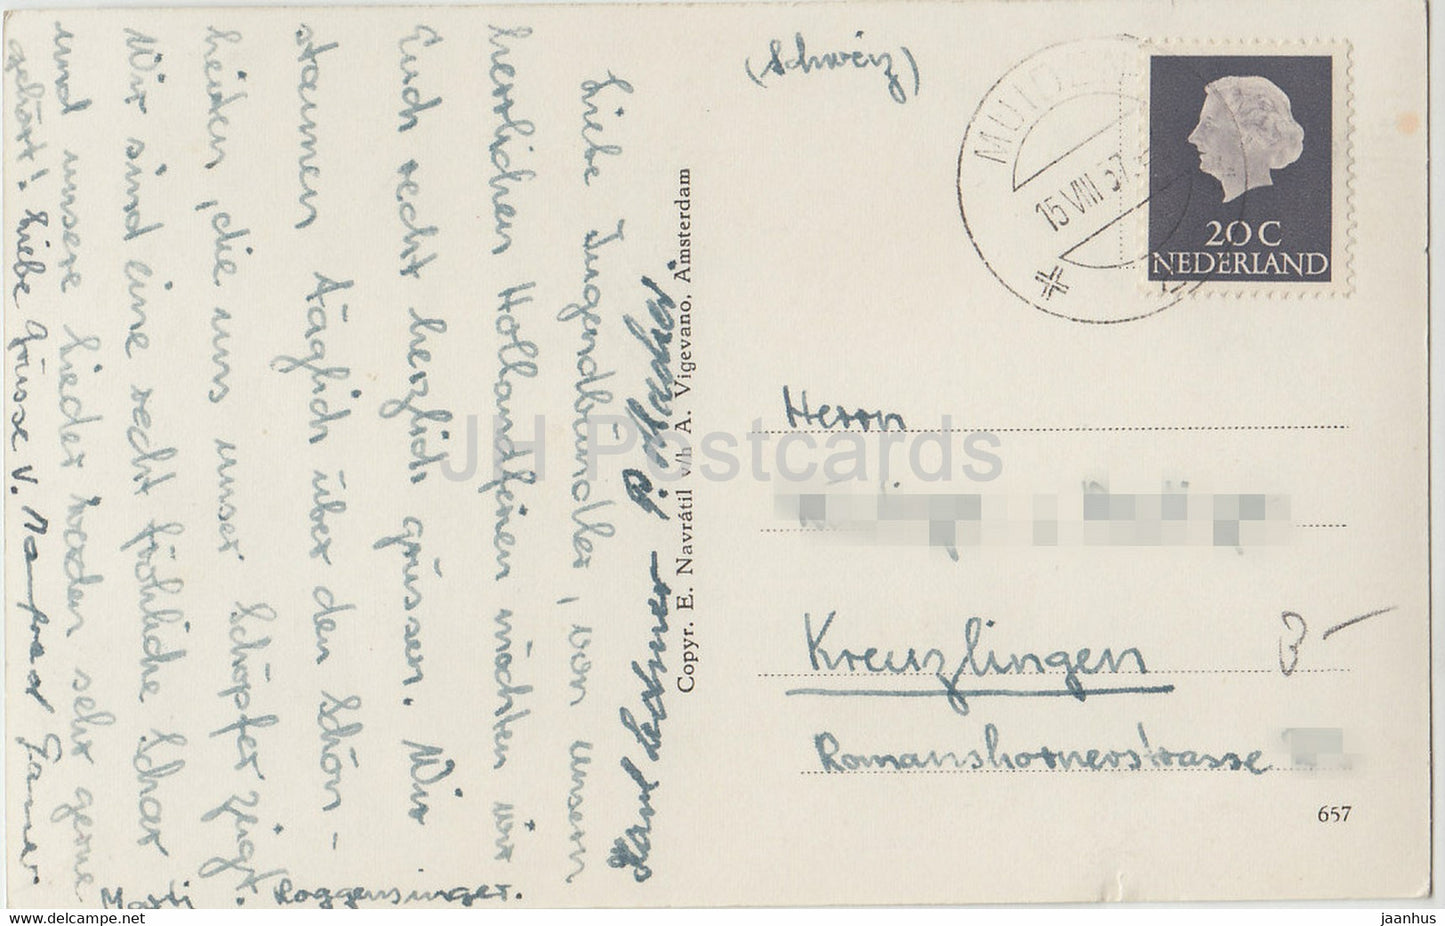 Amsterdam - Herengracht - old postcard - 1957 - Netherlands - used